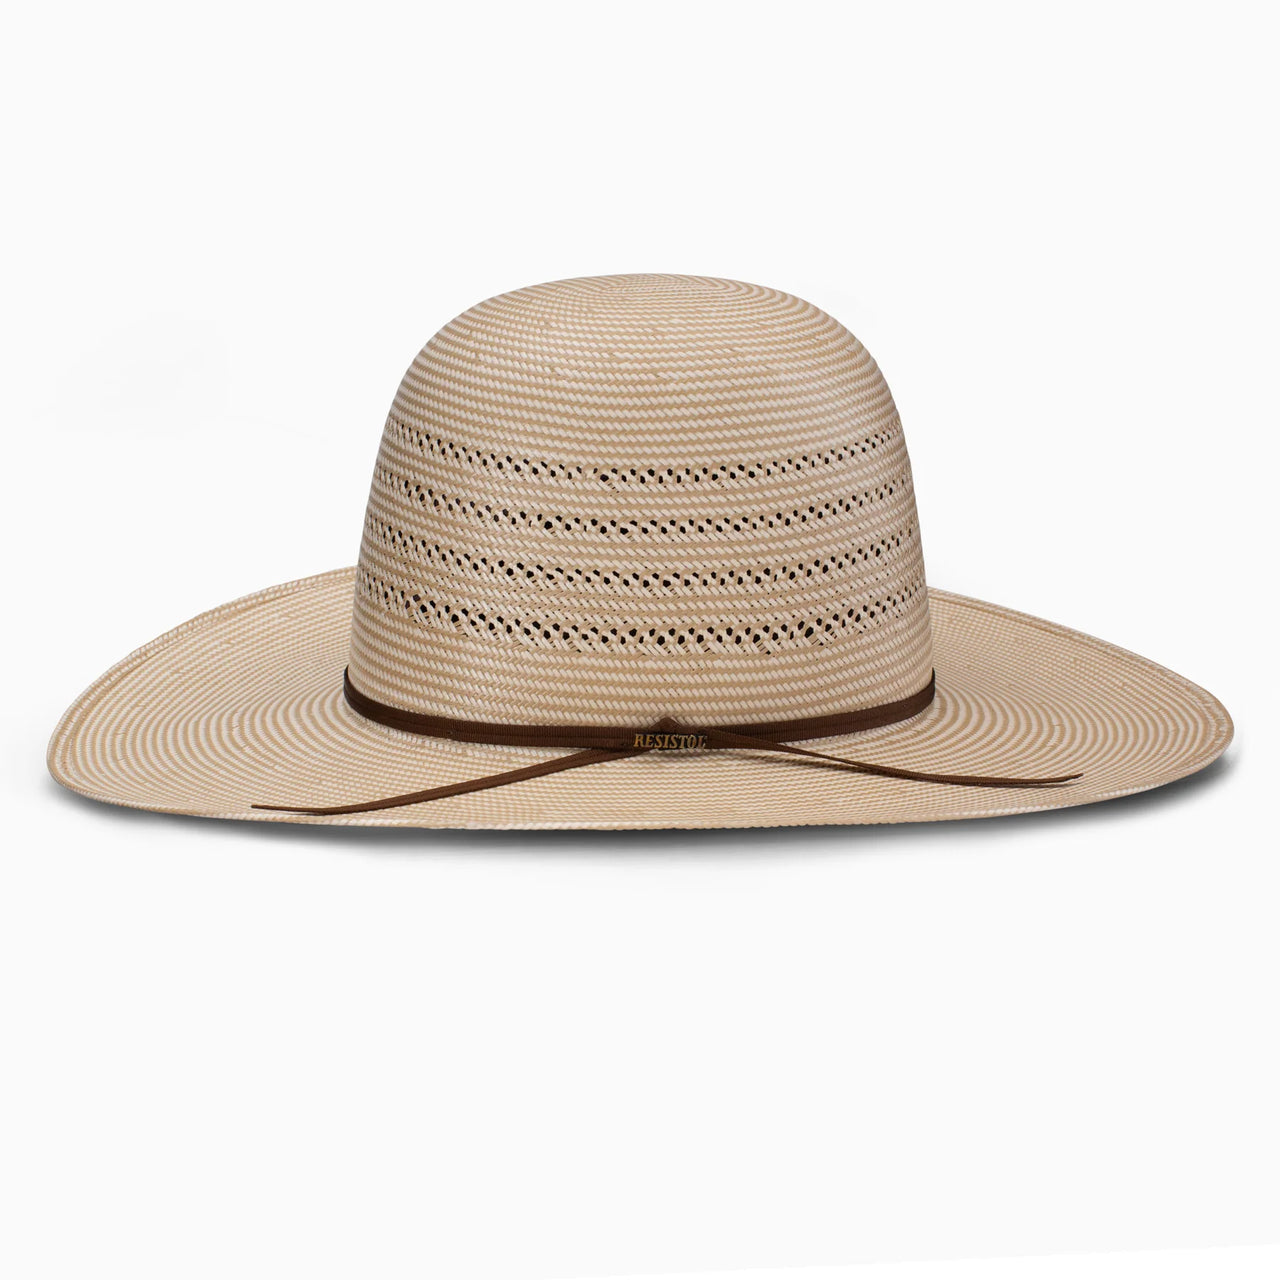 Resistol 20X 4 Corners Straw Western Hat - Natural/Tan